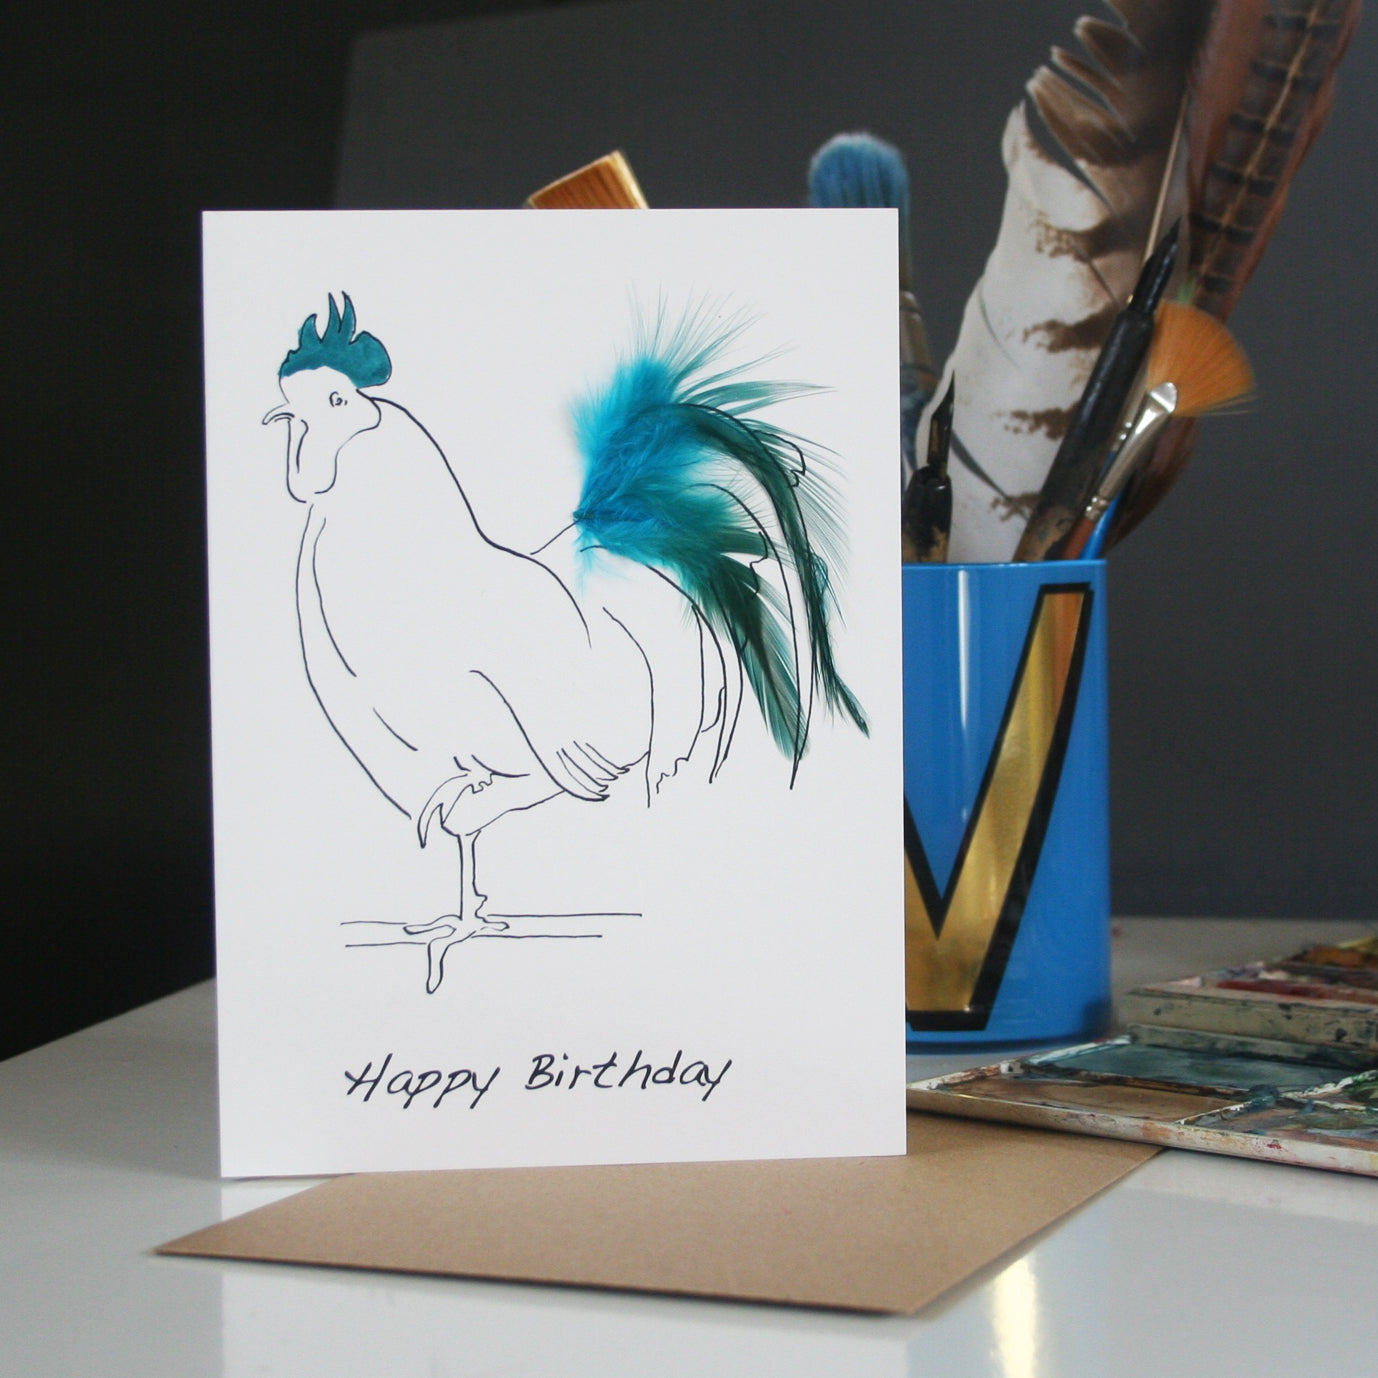 Happy Birthday Oh Me cockerel Cards